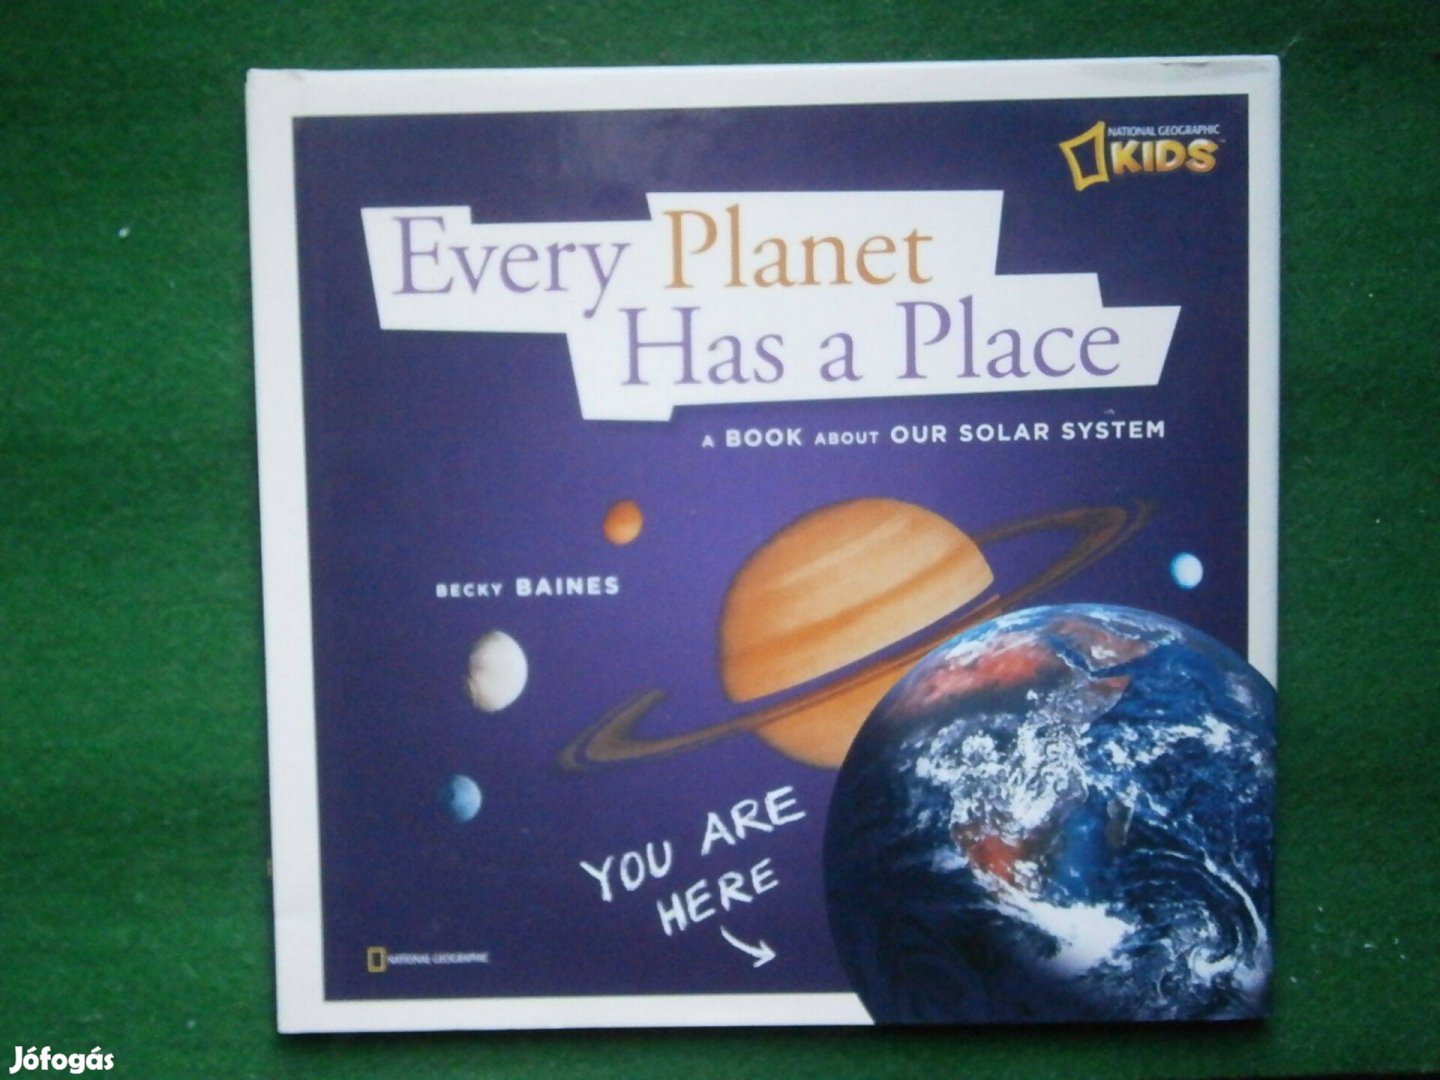 Eladó - Every planet has a place